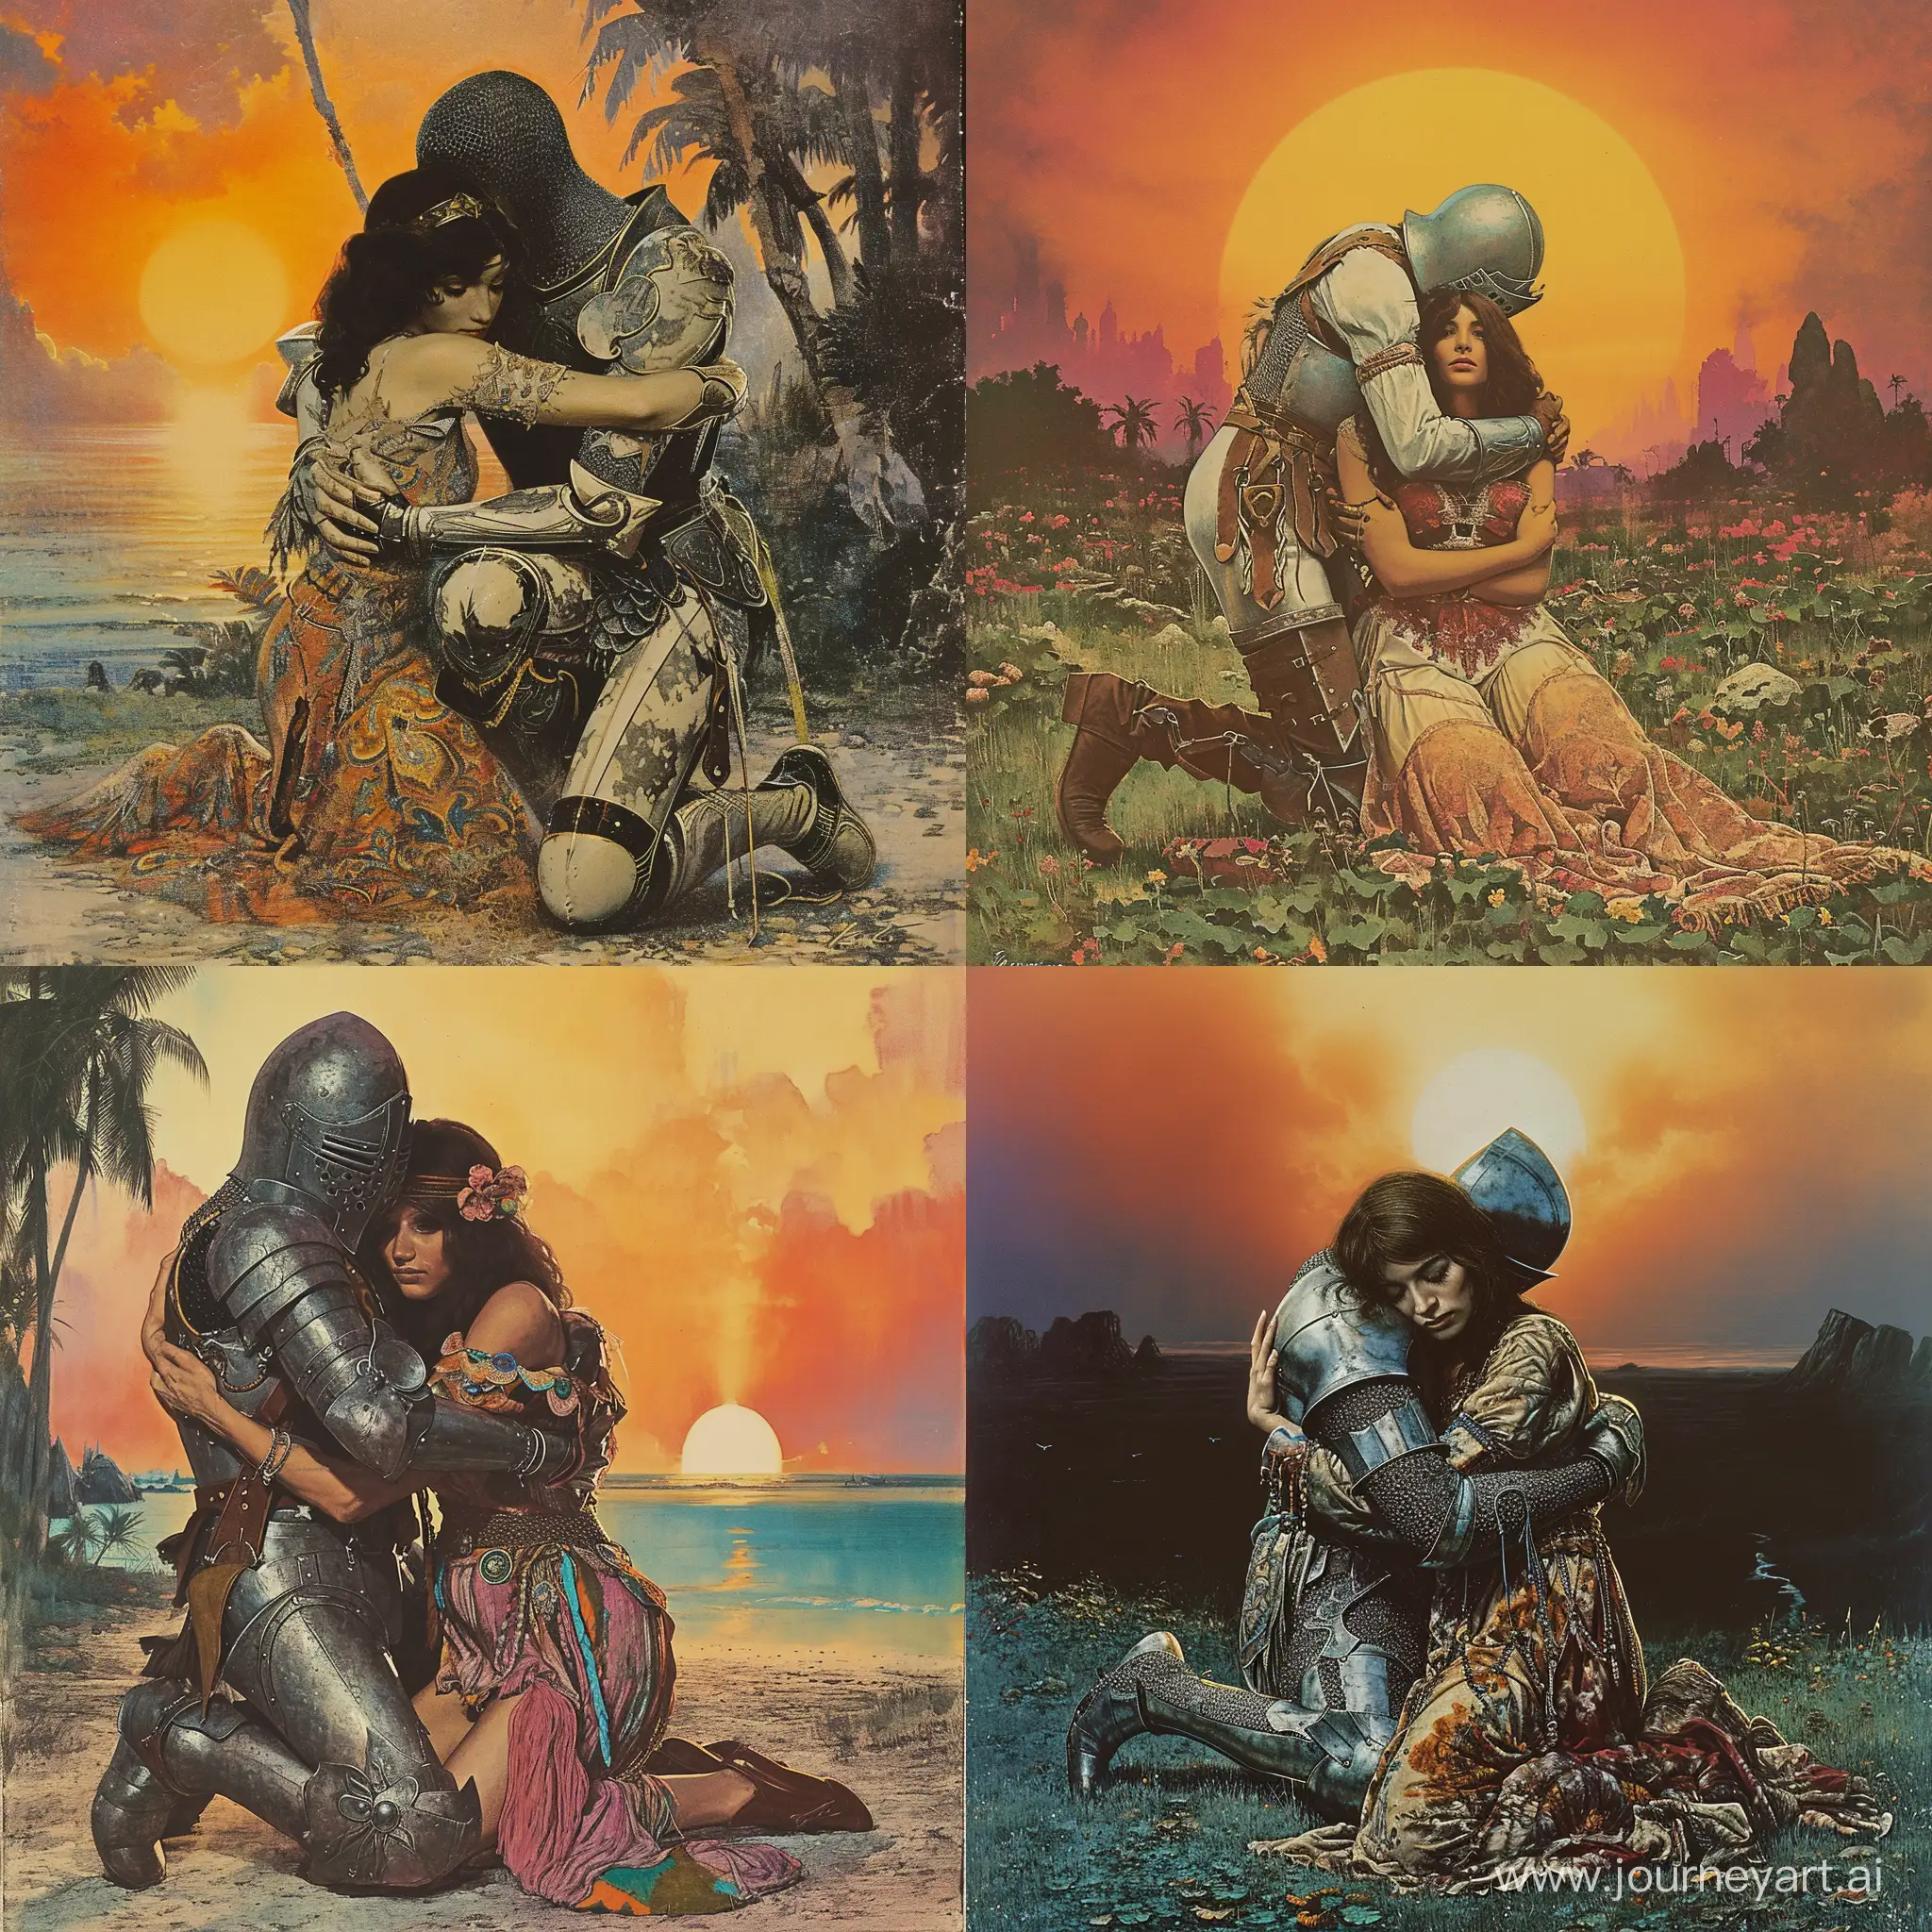 Romantic-Bohemian-Knight-Embracing-Woman-in-1970s-Dark-Fantasy-Paradise